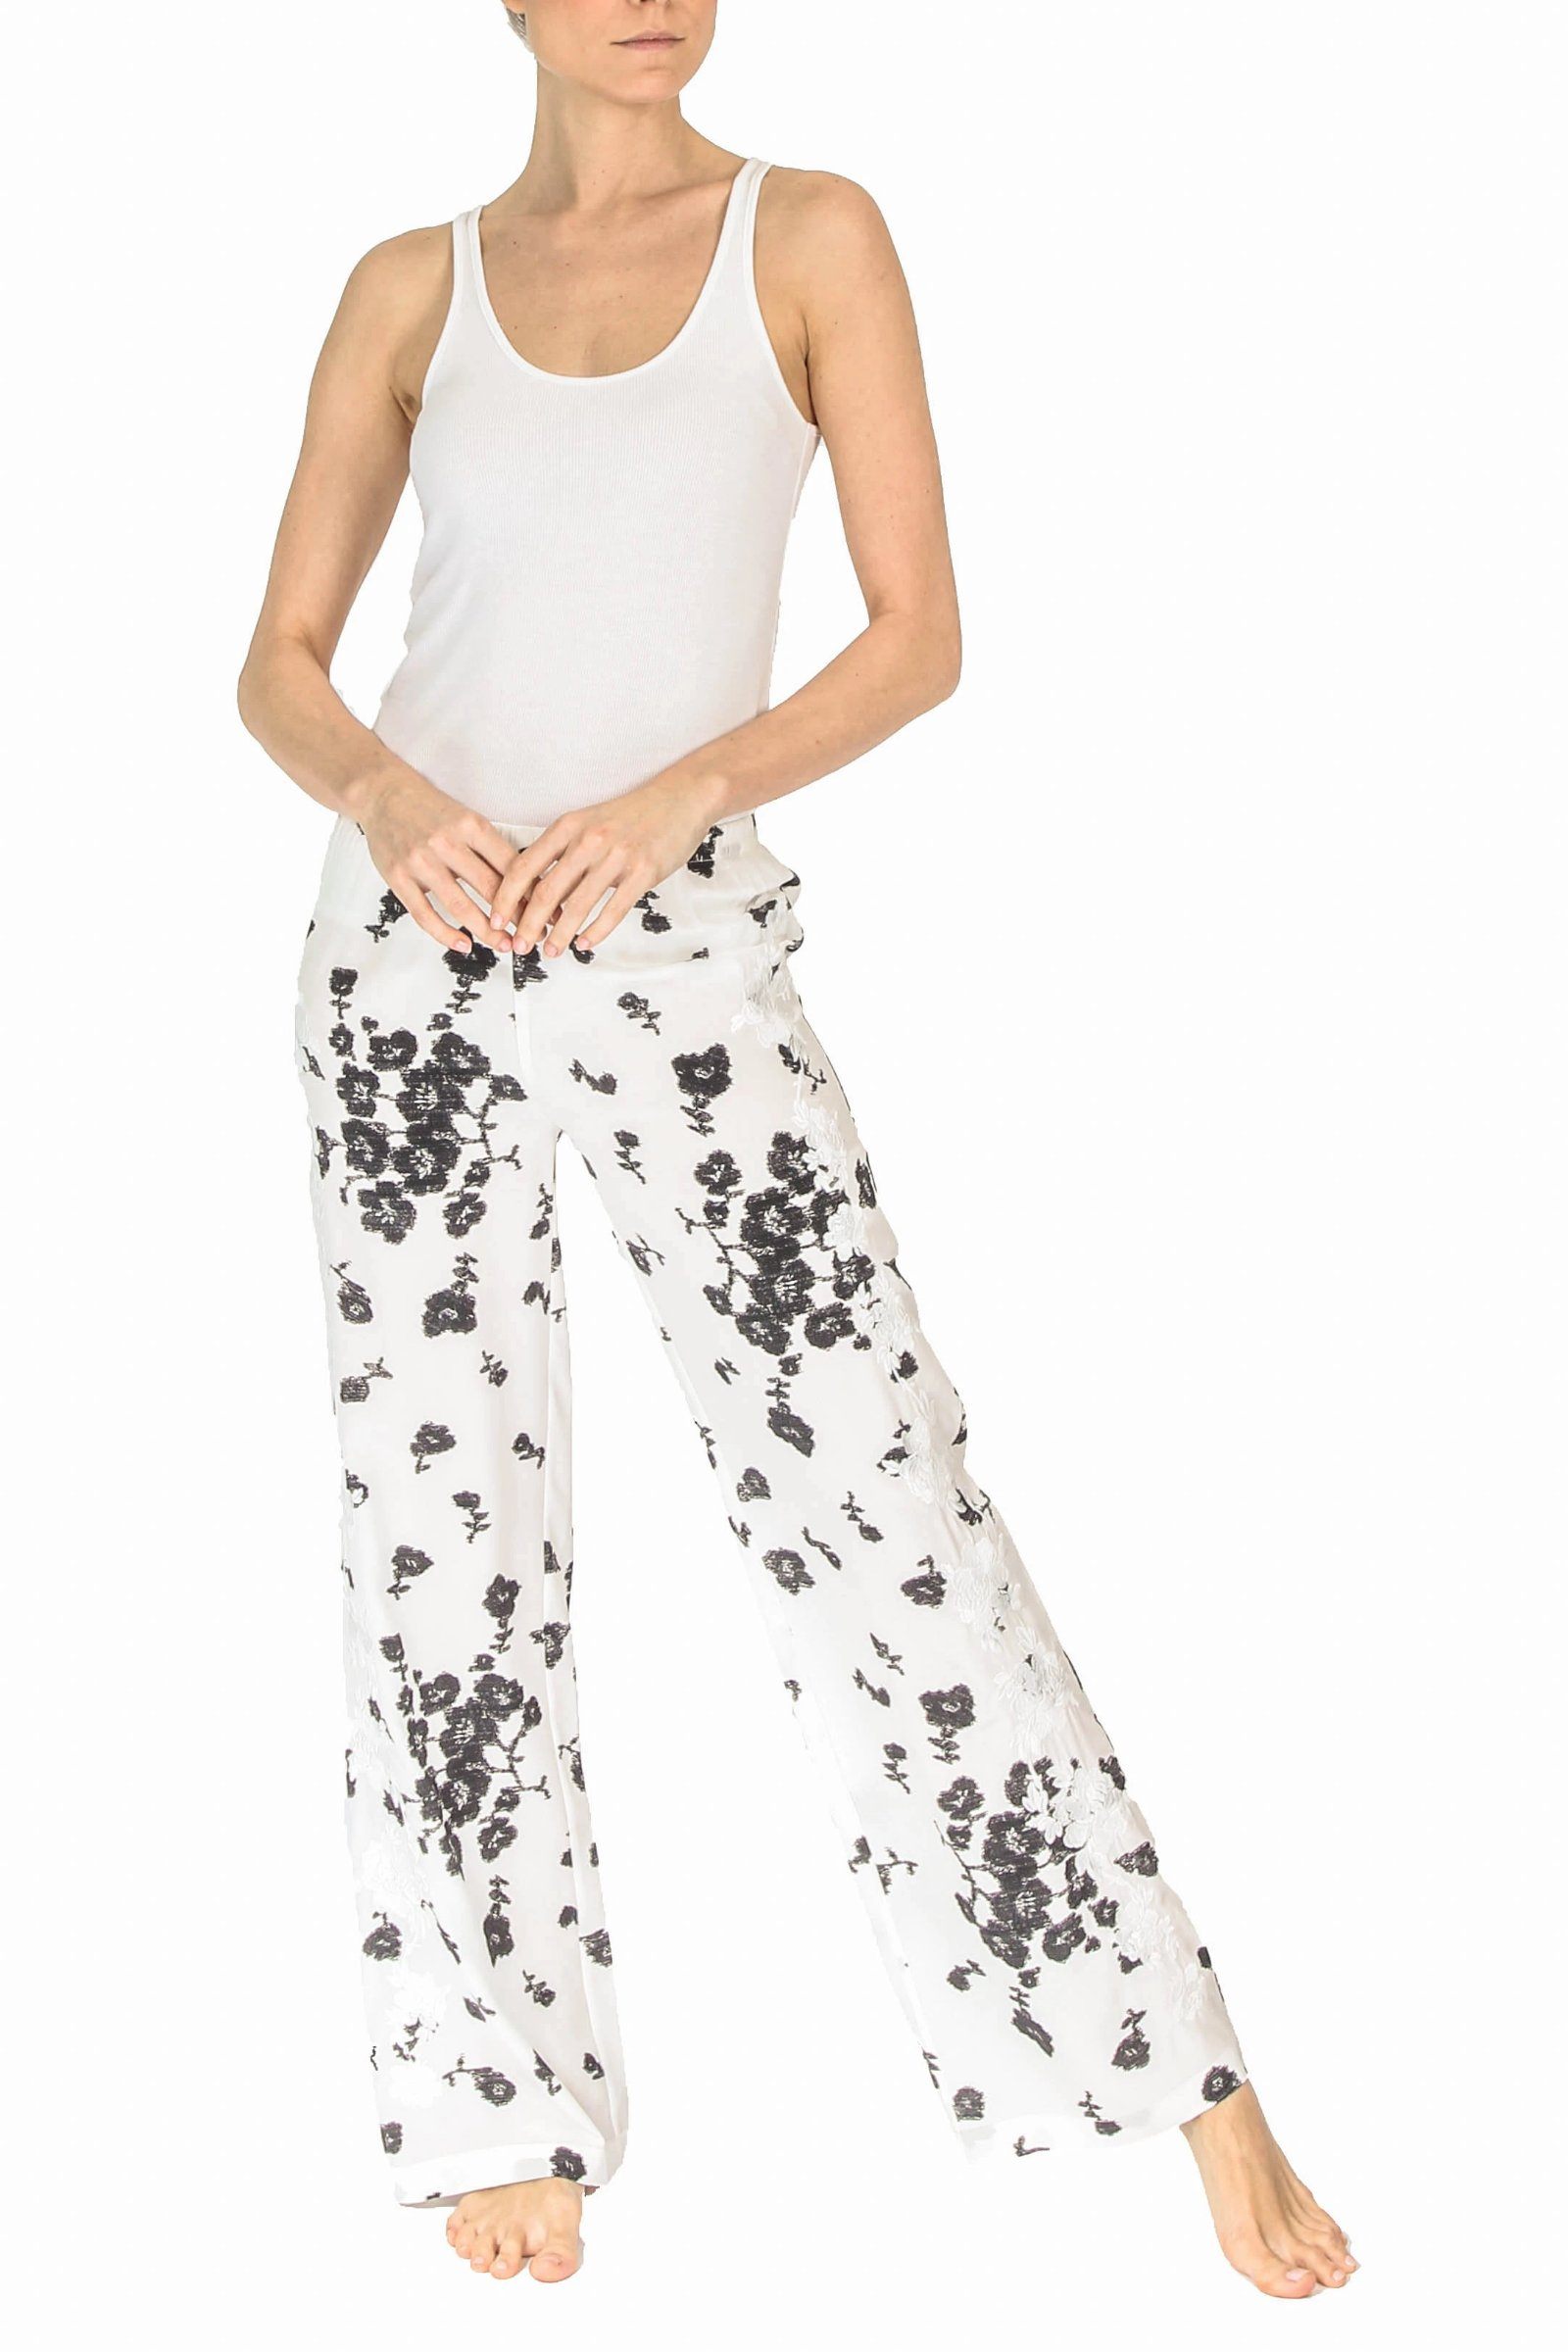 St Tropez West White Embossed Pattern Pants Women Size 14 NEW